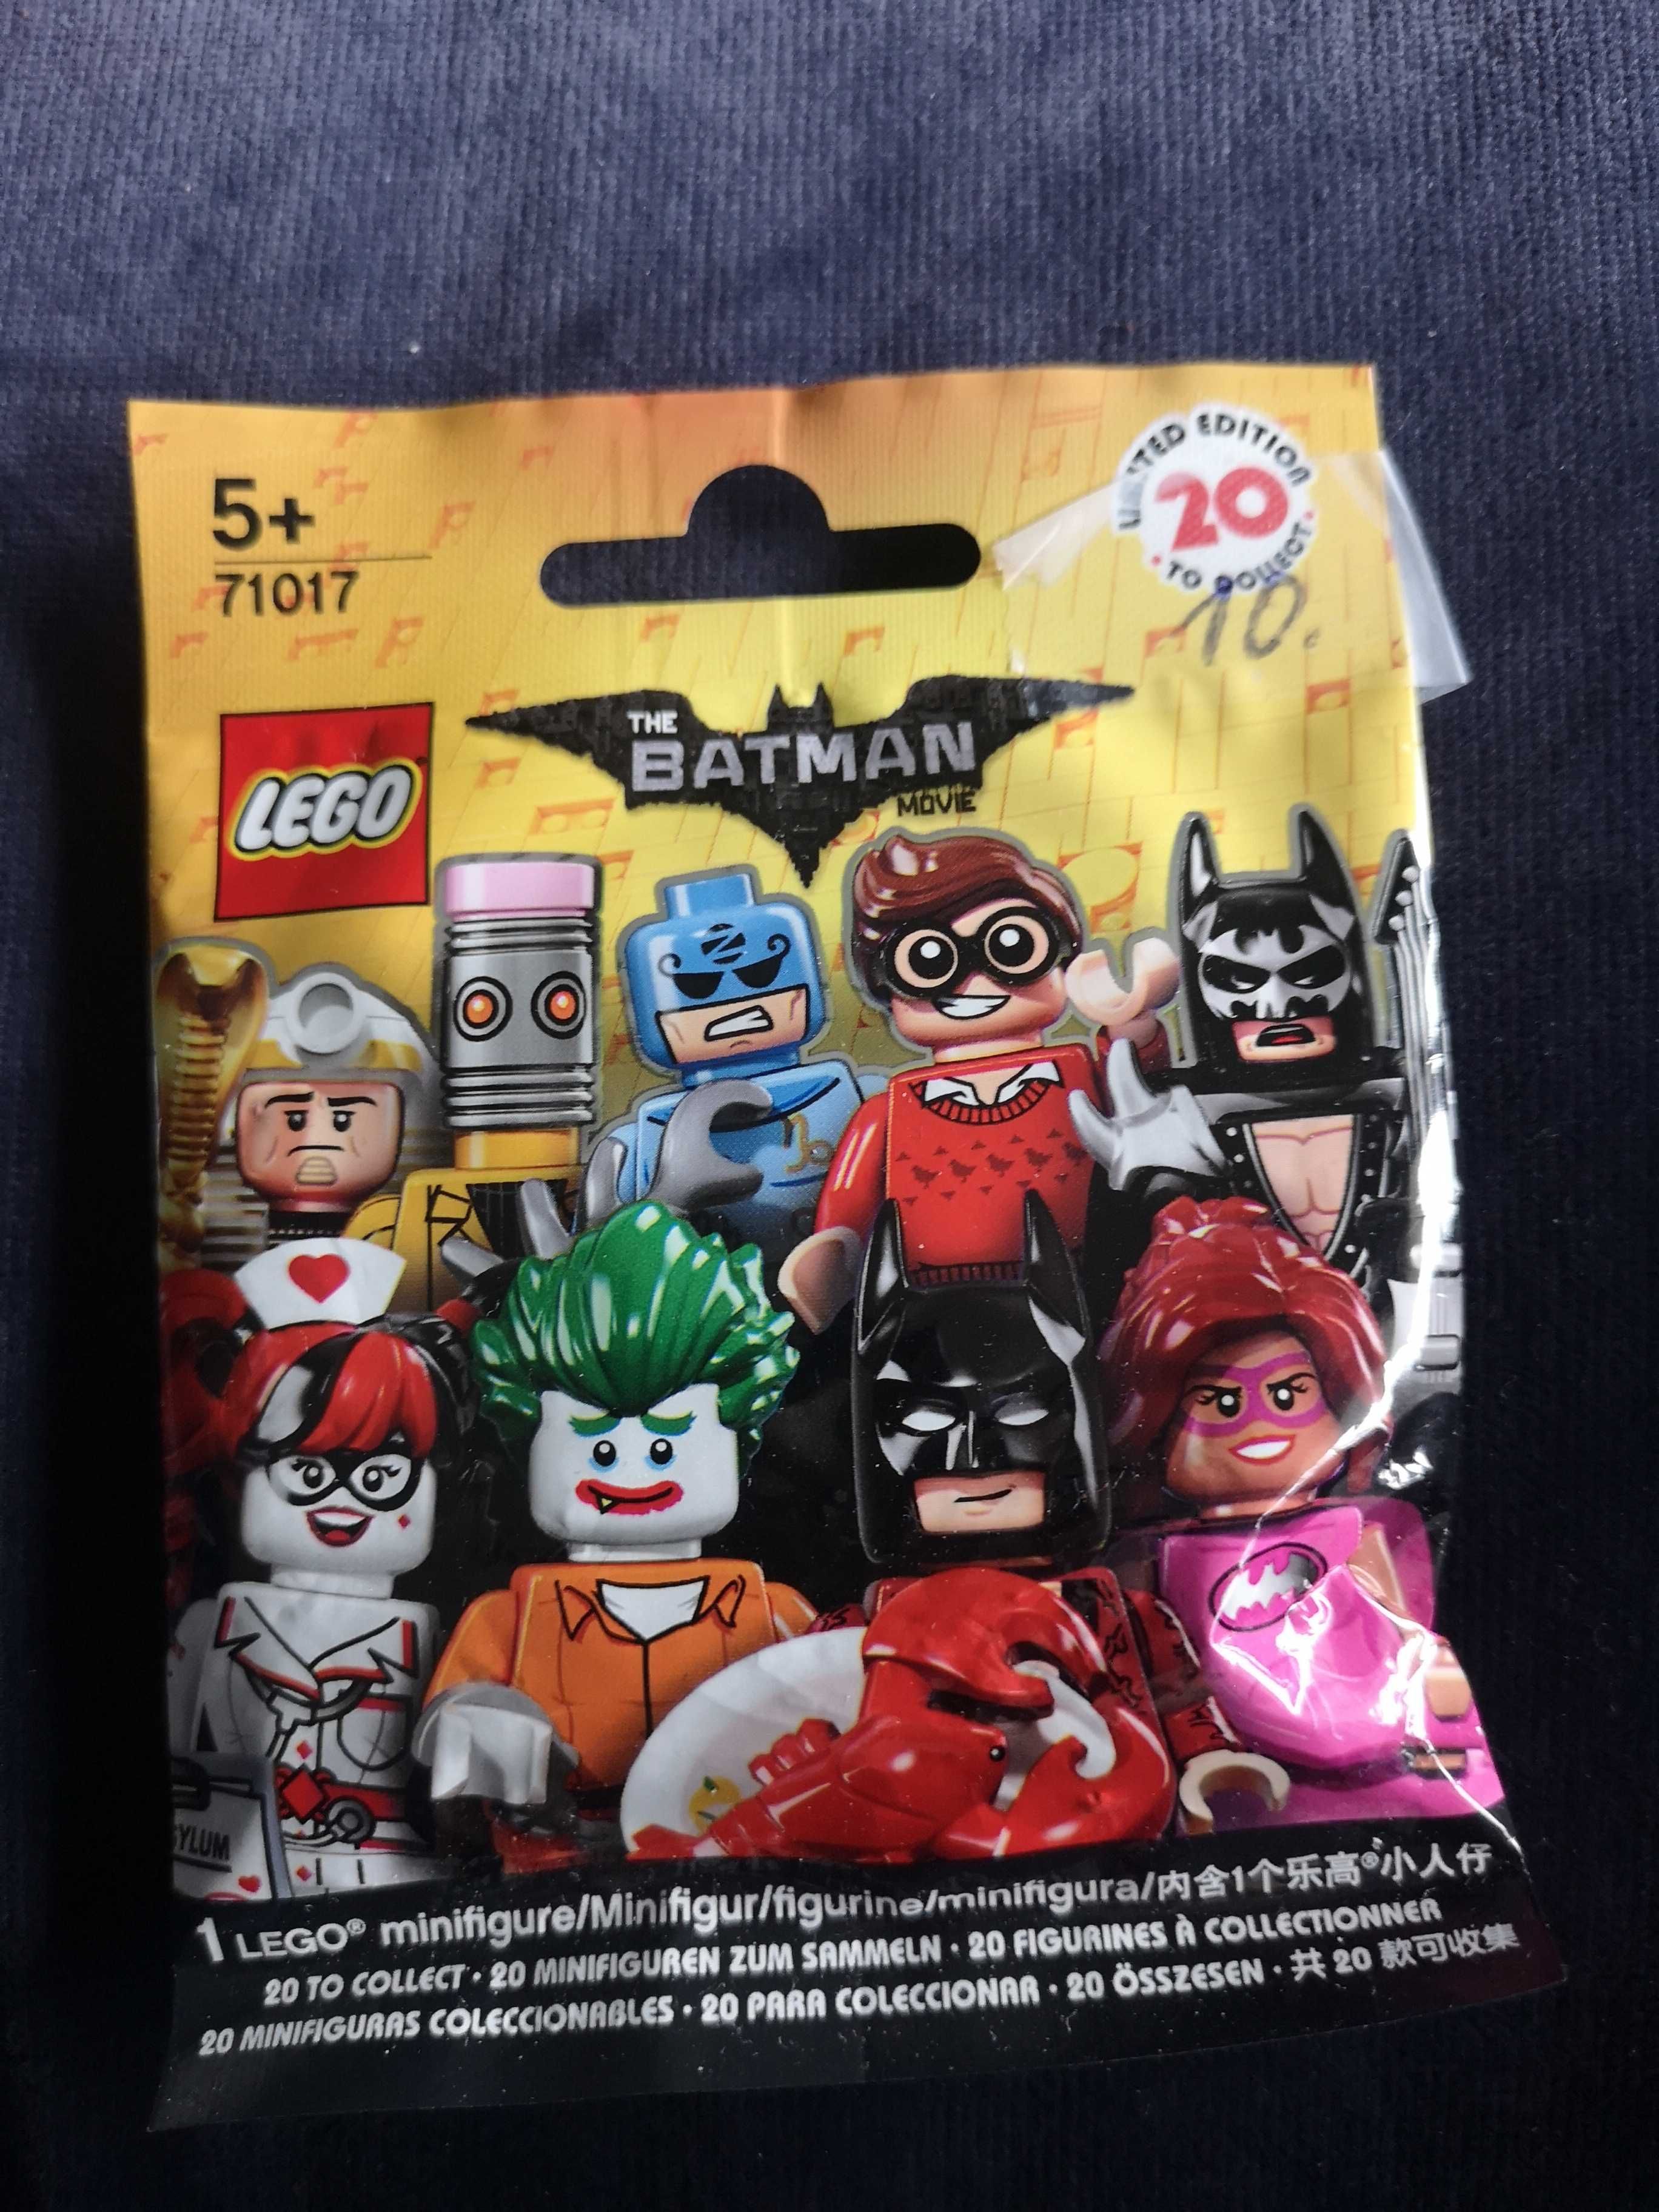 Lego minifigures seria Batman Movie 1 - 71017, Pink Batgirl